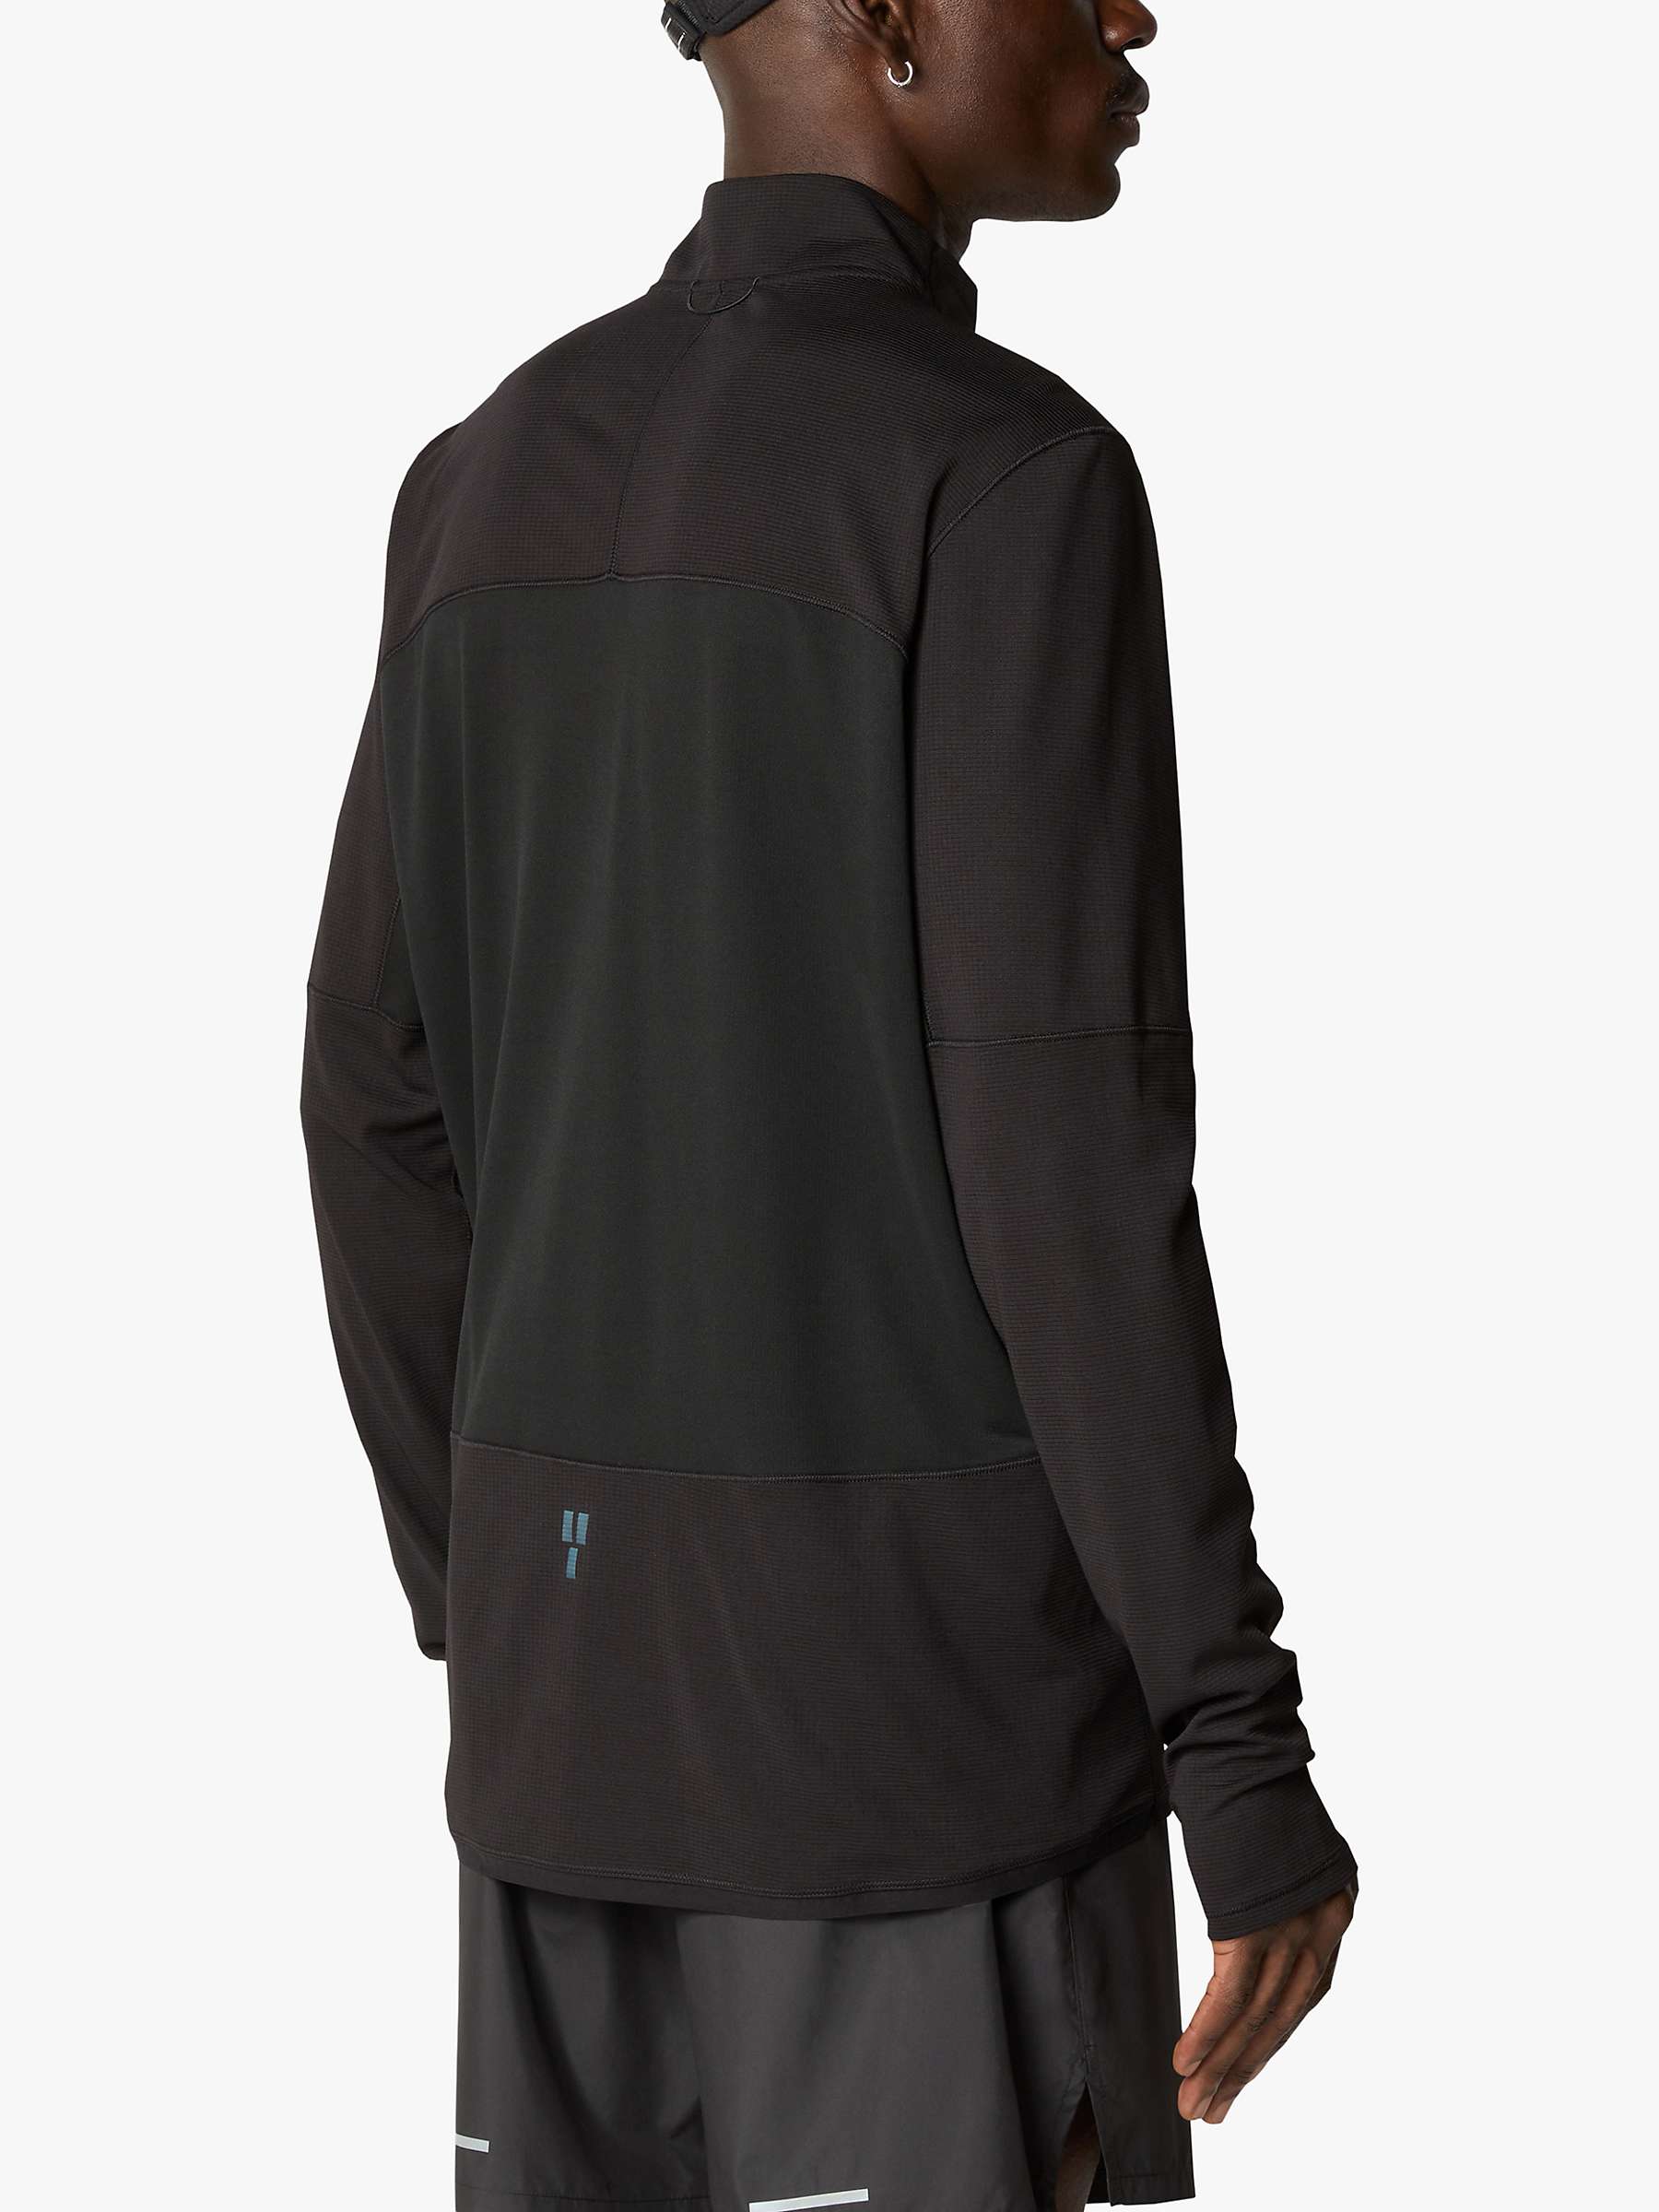 Buy The North Face Sunriser 1/4 Zip Long Sleeve Top, Black Online at johnlewis.com